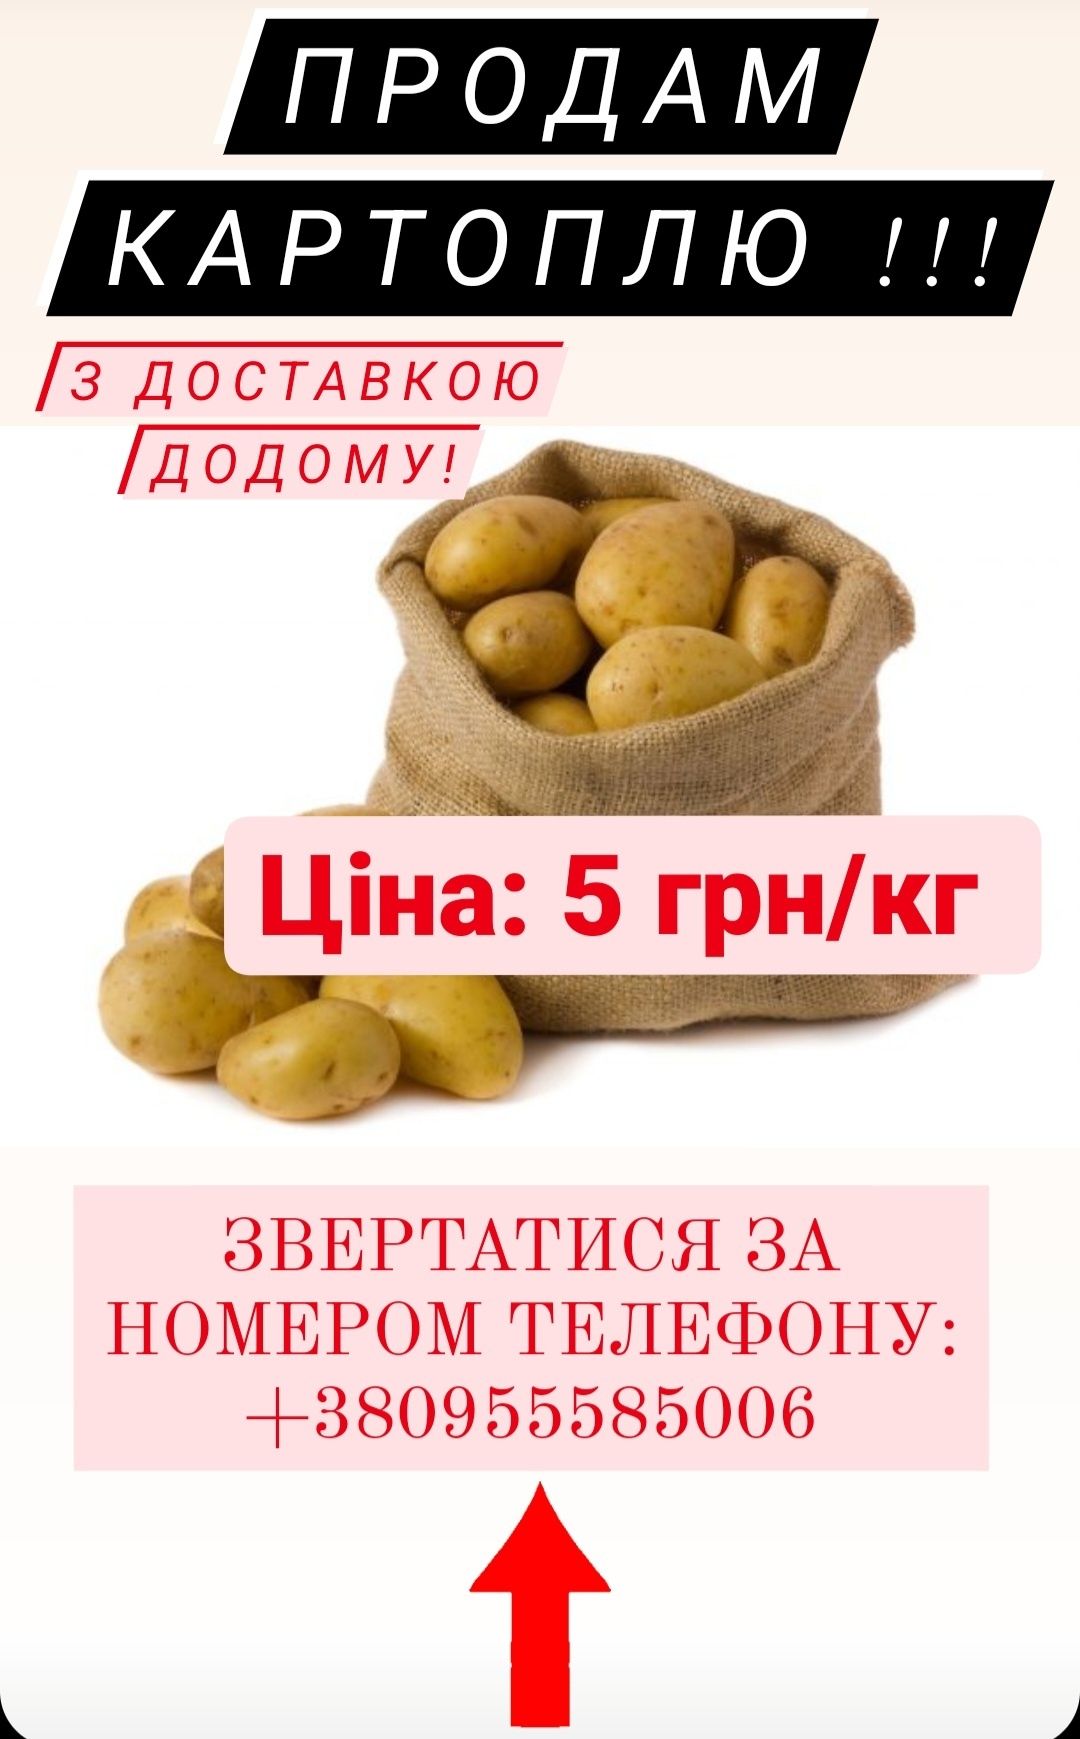 Картопля 4грн/кг продам